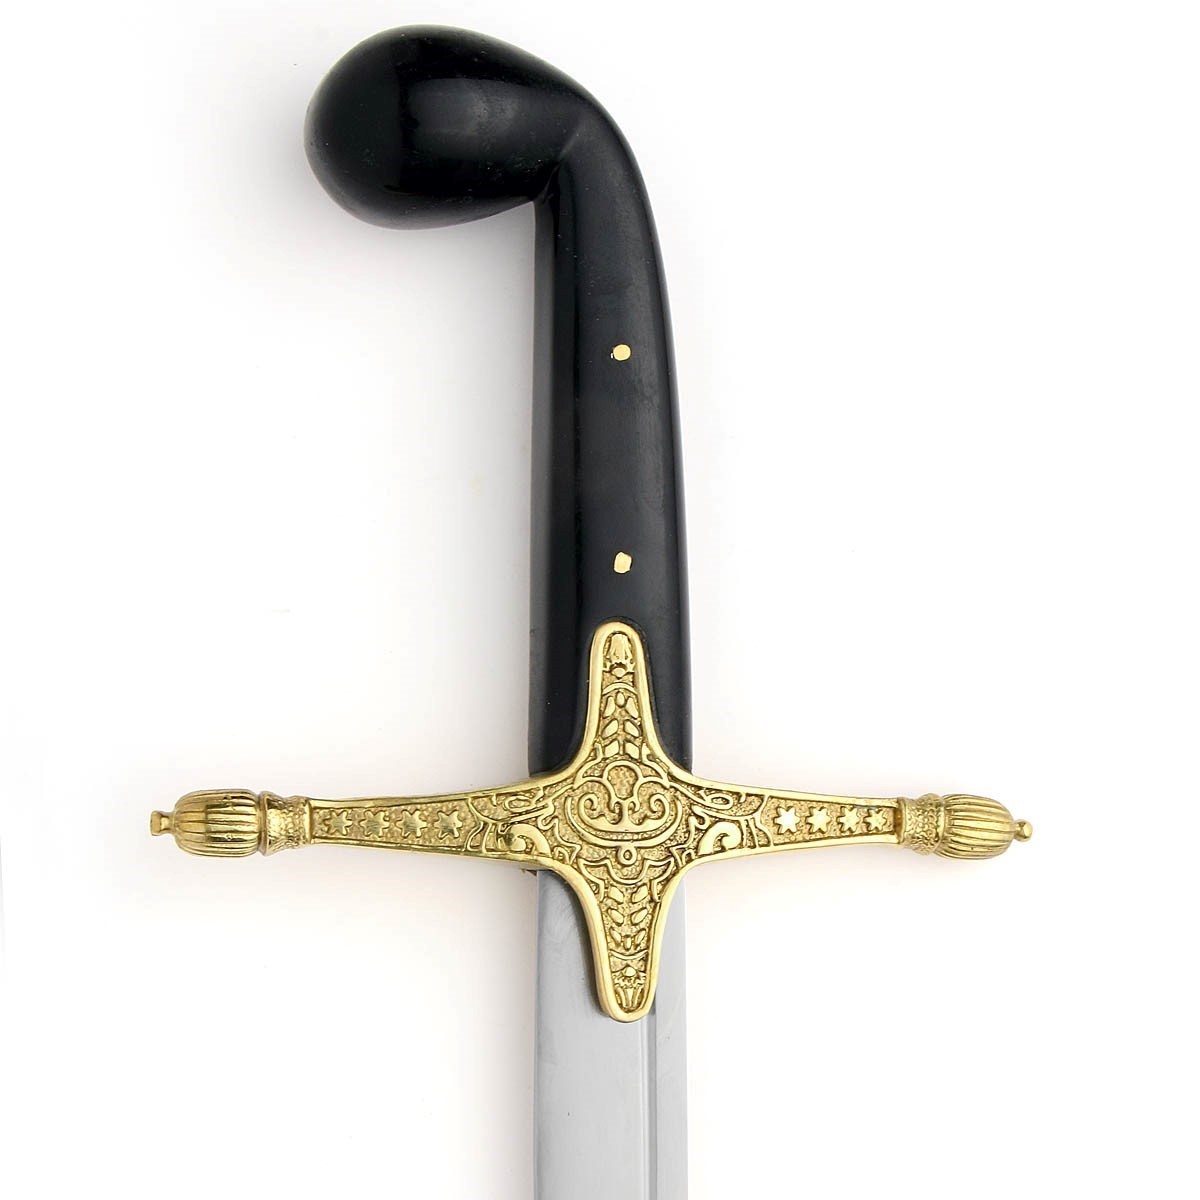 Cold Steel Shamshir Sword